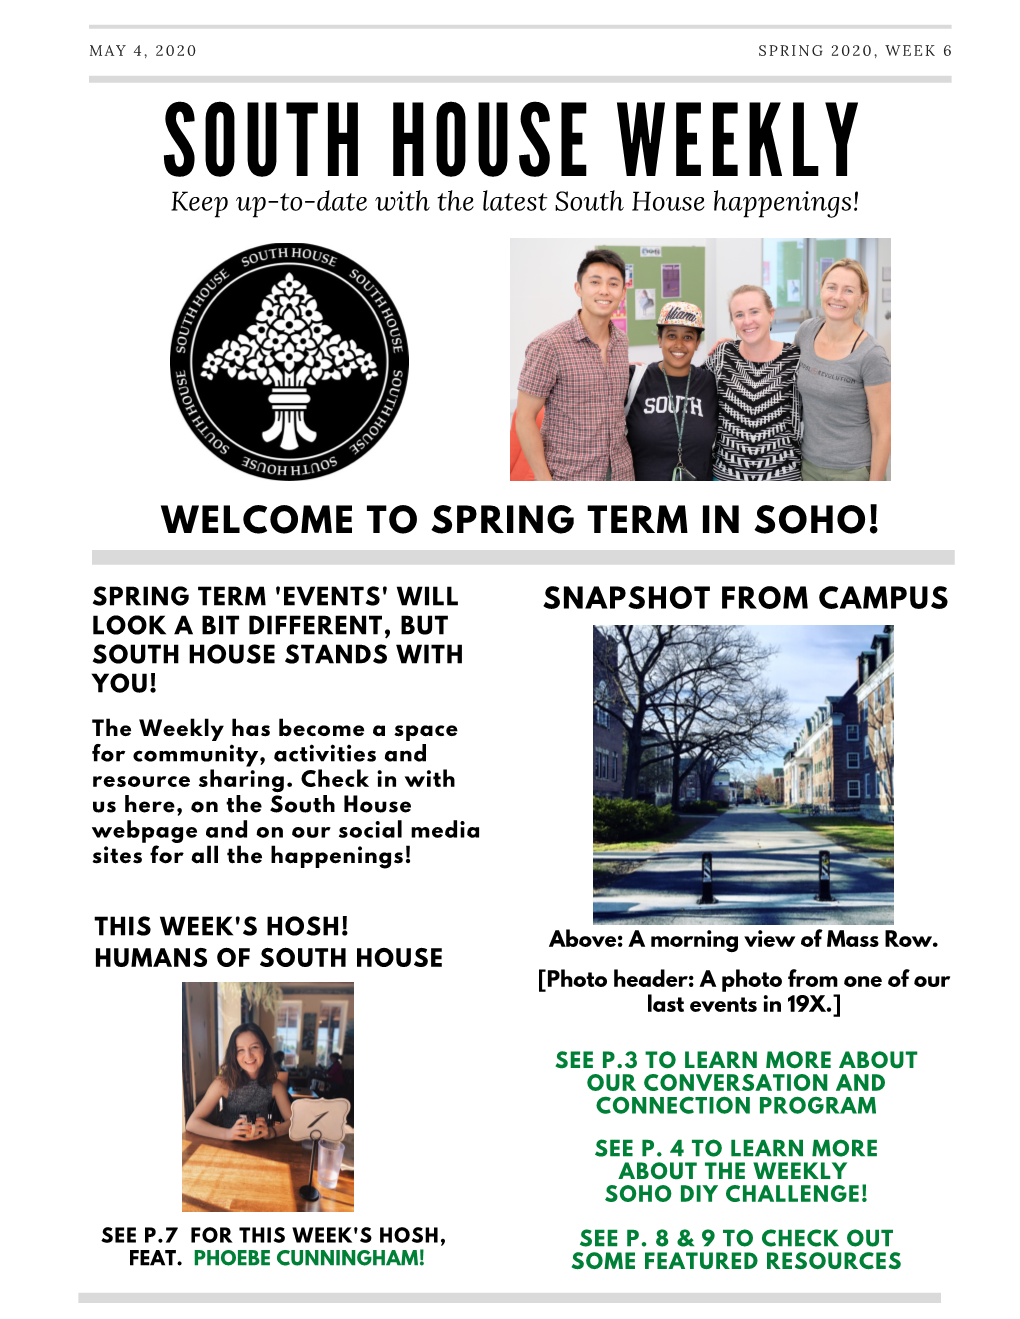 South House Weekly, 20S – Week 6 (May 4, 2020)